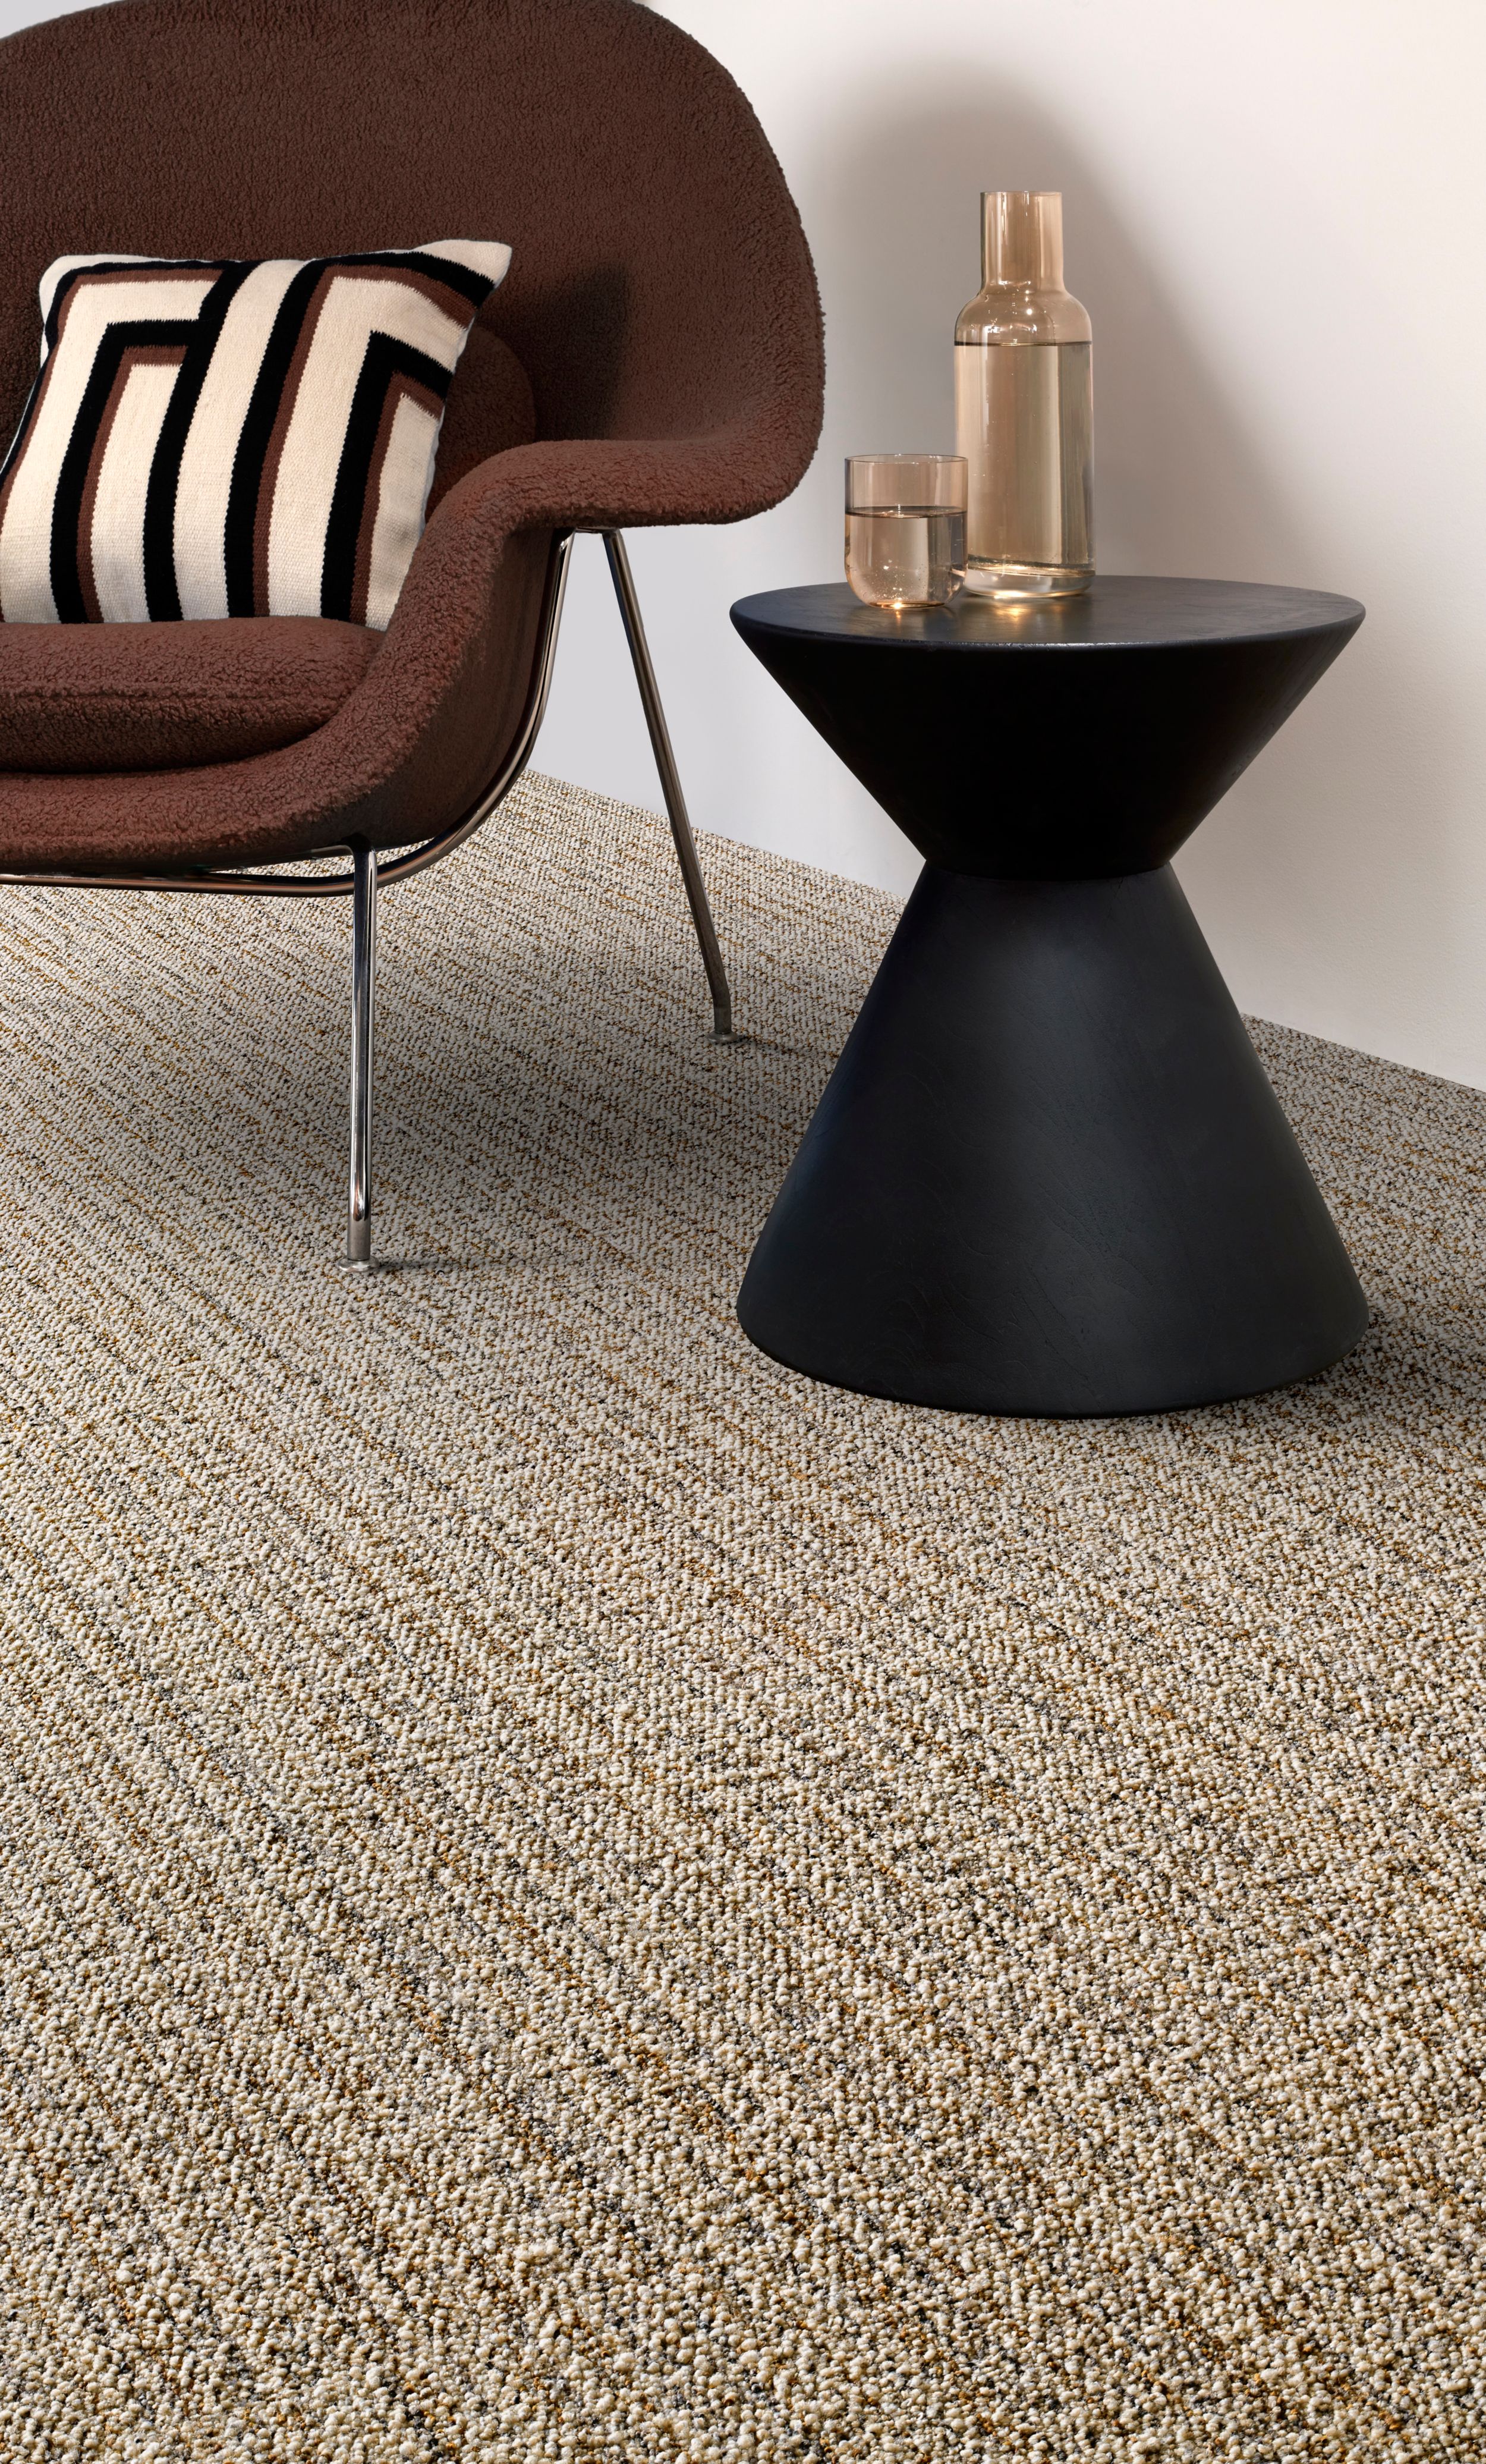 Interface E616 plank carpet tile in corporate lobby or private office Bildnummer 2